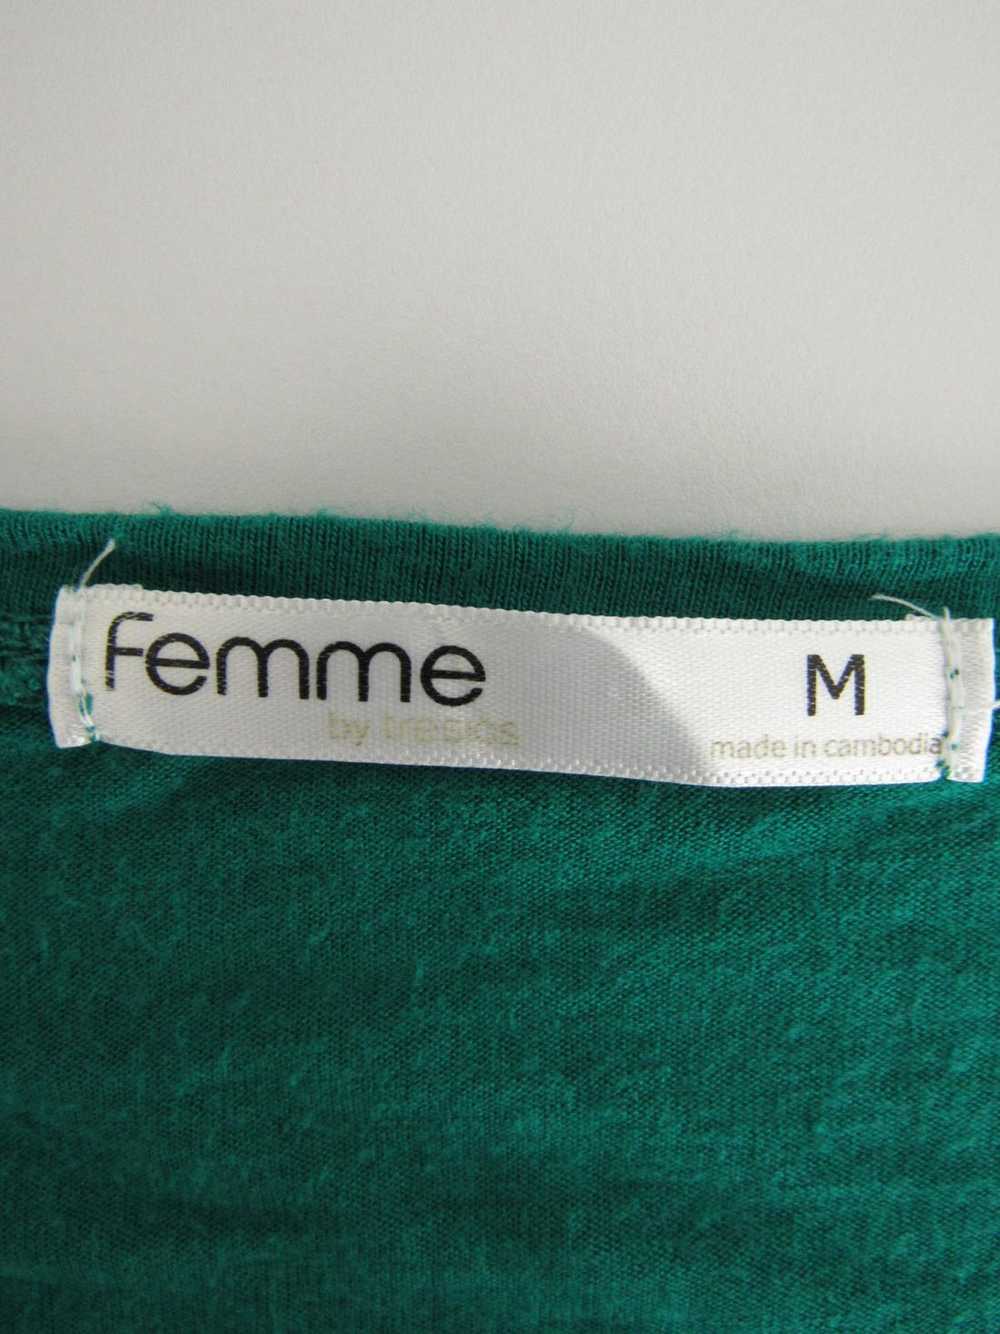 Femme by Tresics T-Shirt Top - image 3